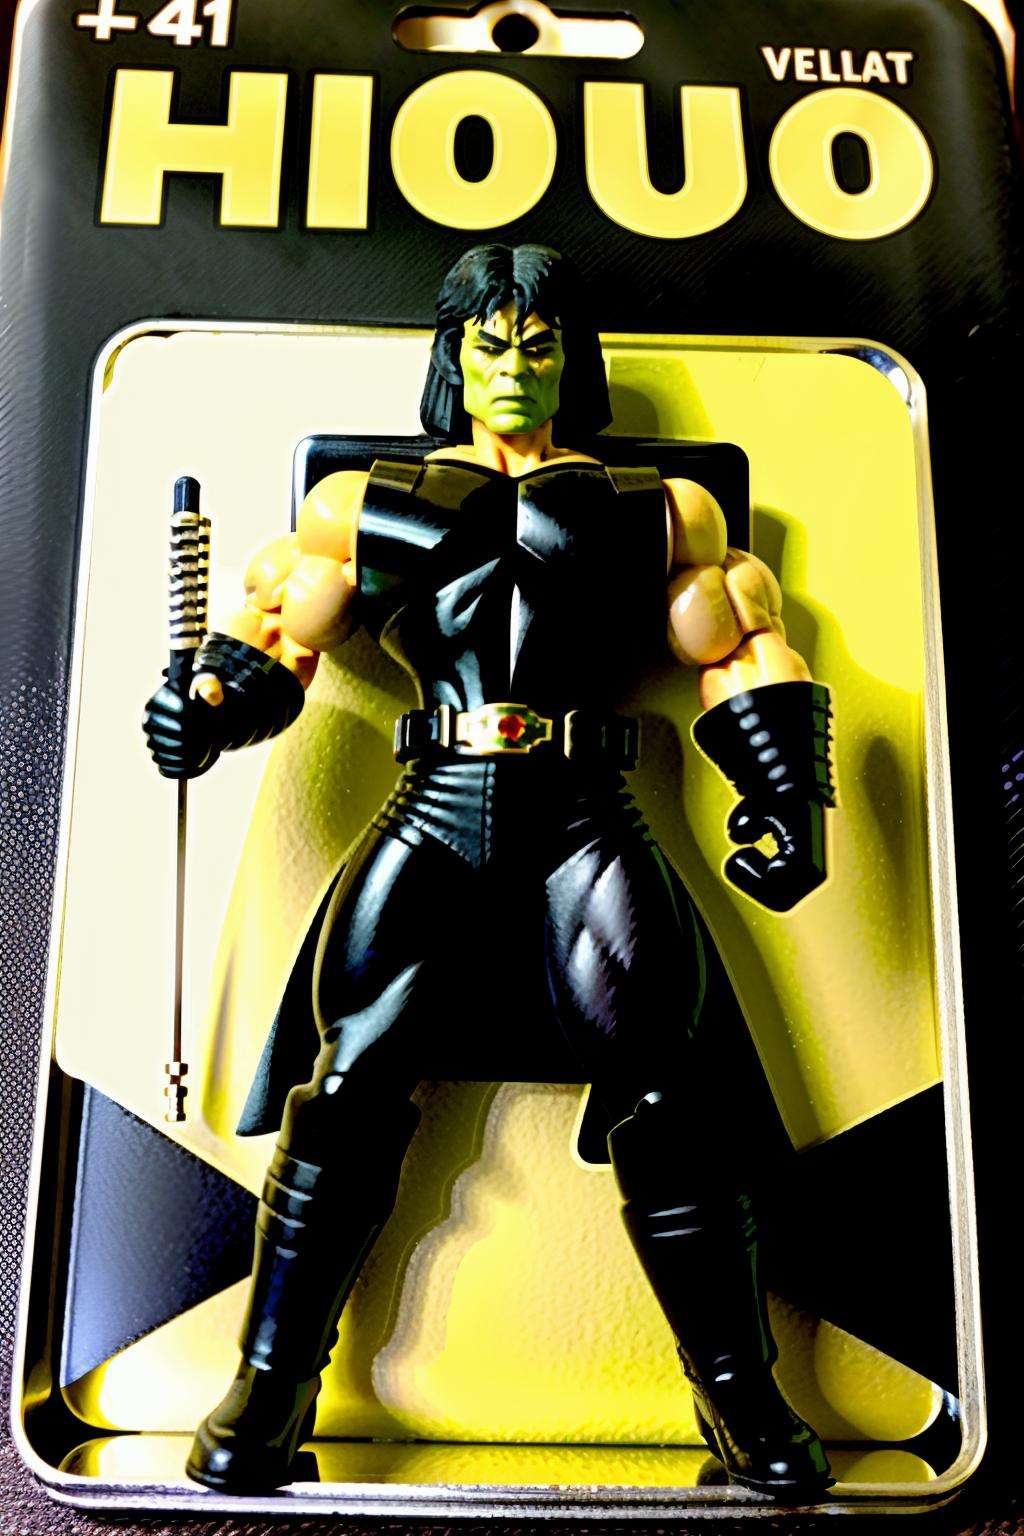 Hulk-Zorro: Merging The Hulk and Zorro, this figure smashes with gamma-powered fury:0.4 while showcasing swashbuckling finesse:0.4. , awe_toys